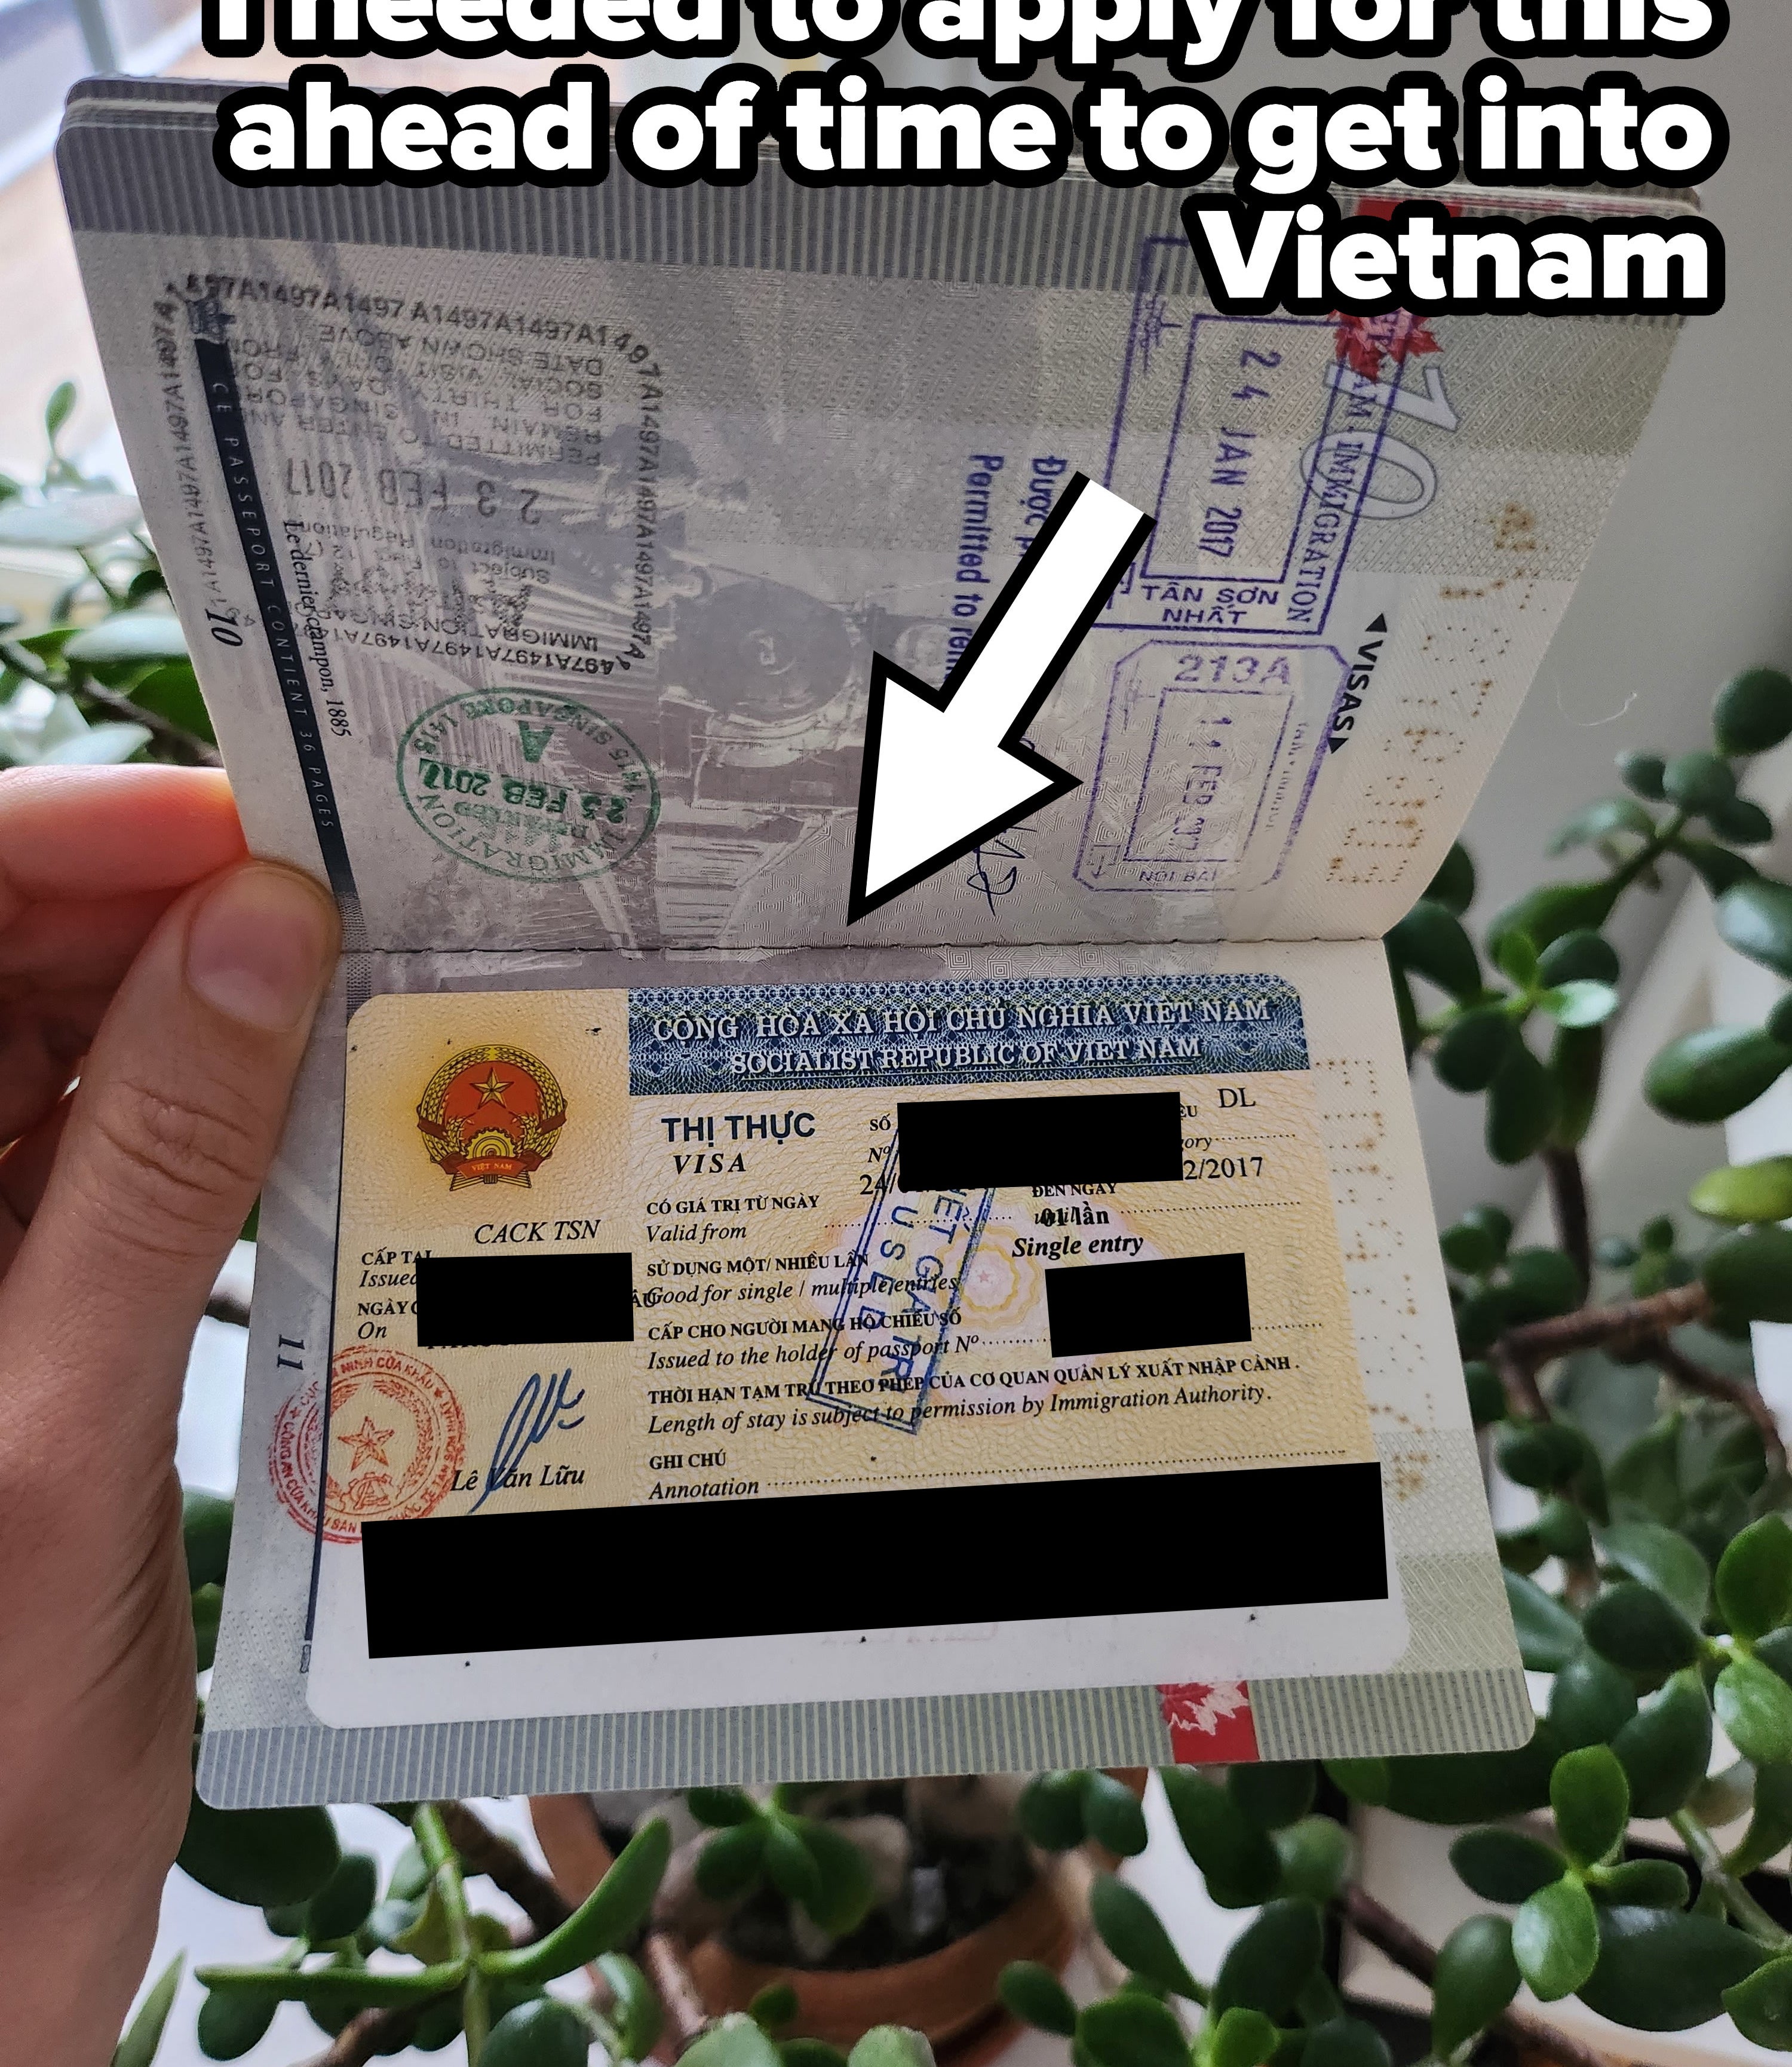 a photo of a visa to get into vietnam